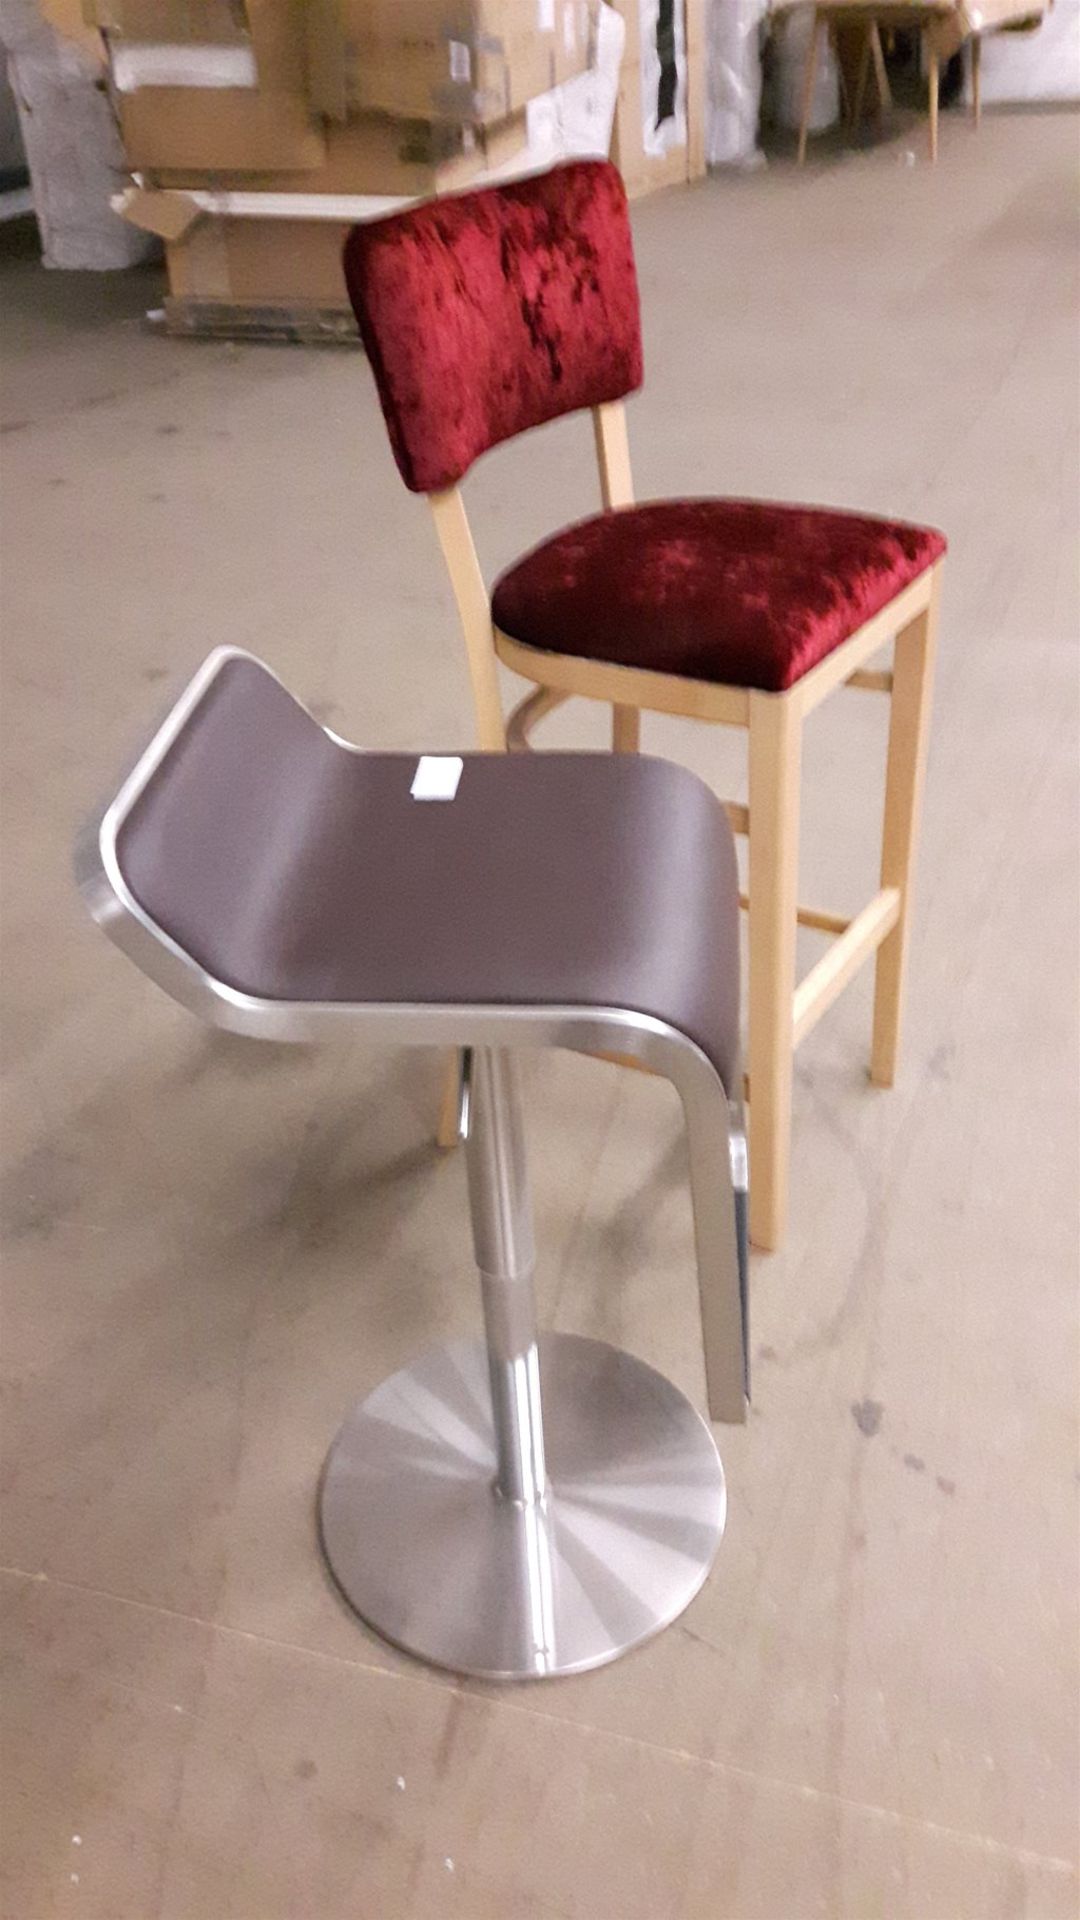 Pair of Bar stools - Image 2 of 3